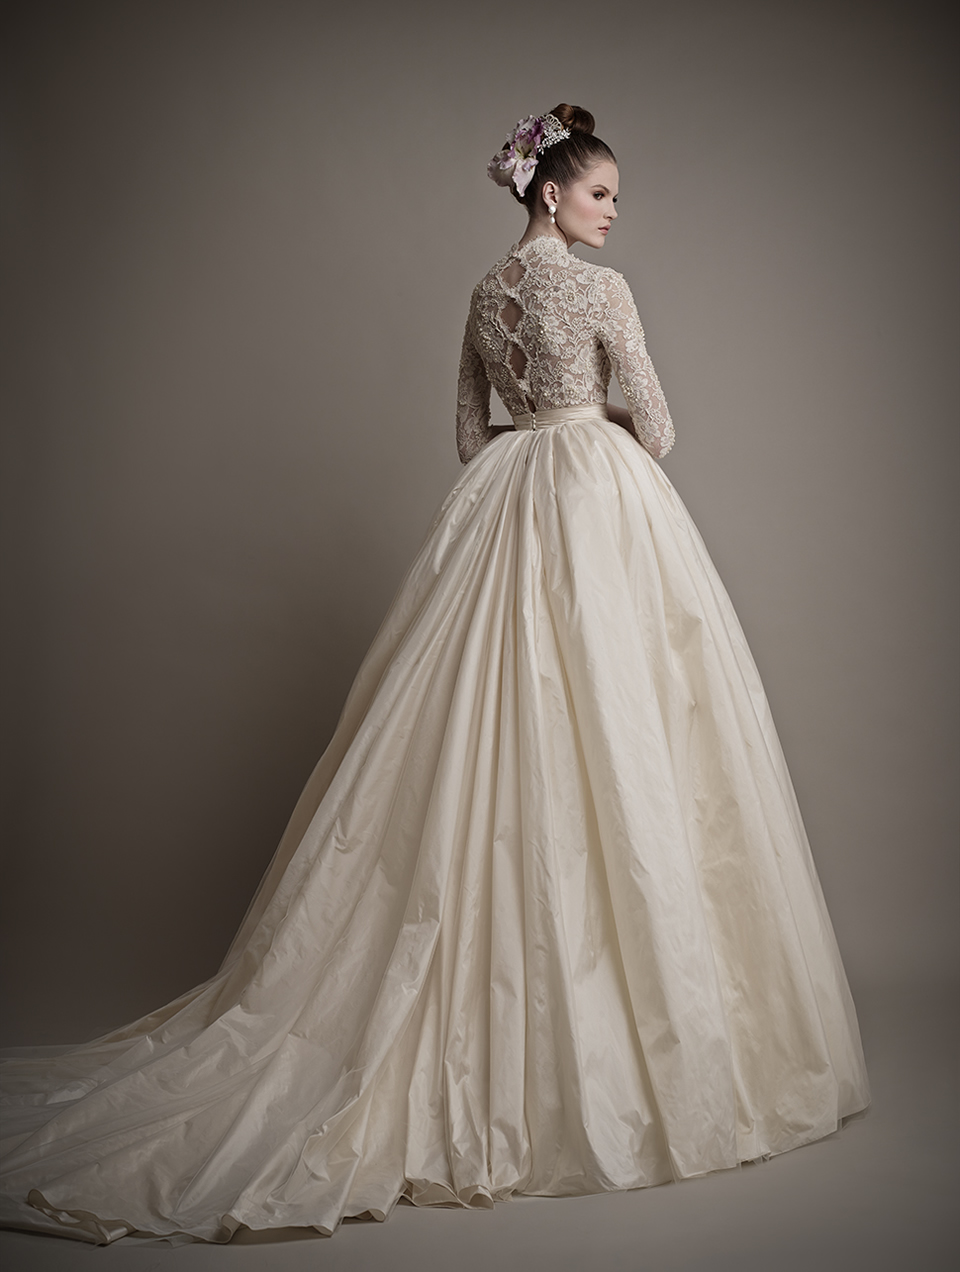 Grace Kelly Inspired Wedding Dress from Ersa Atelier - Charlotte